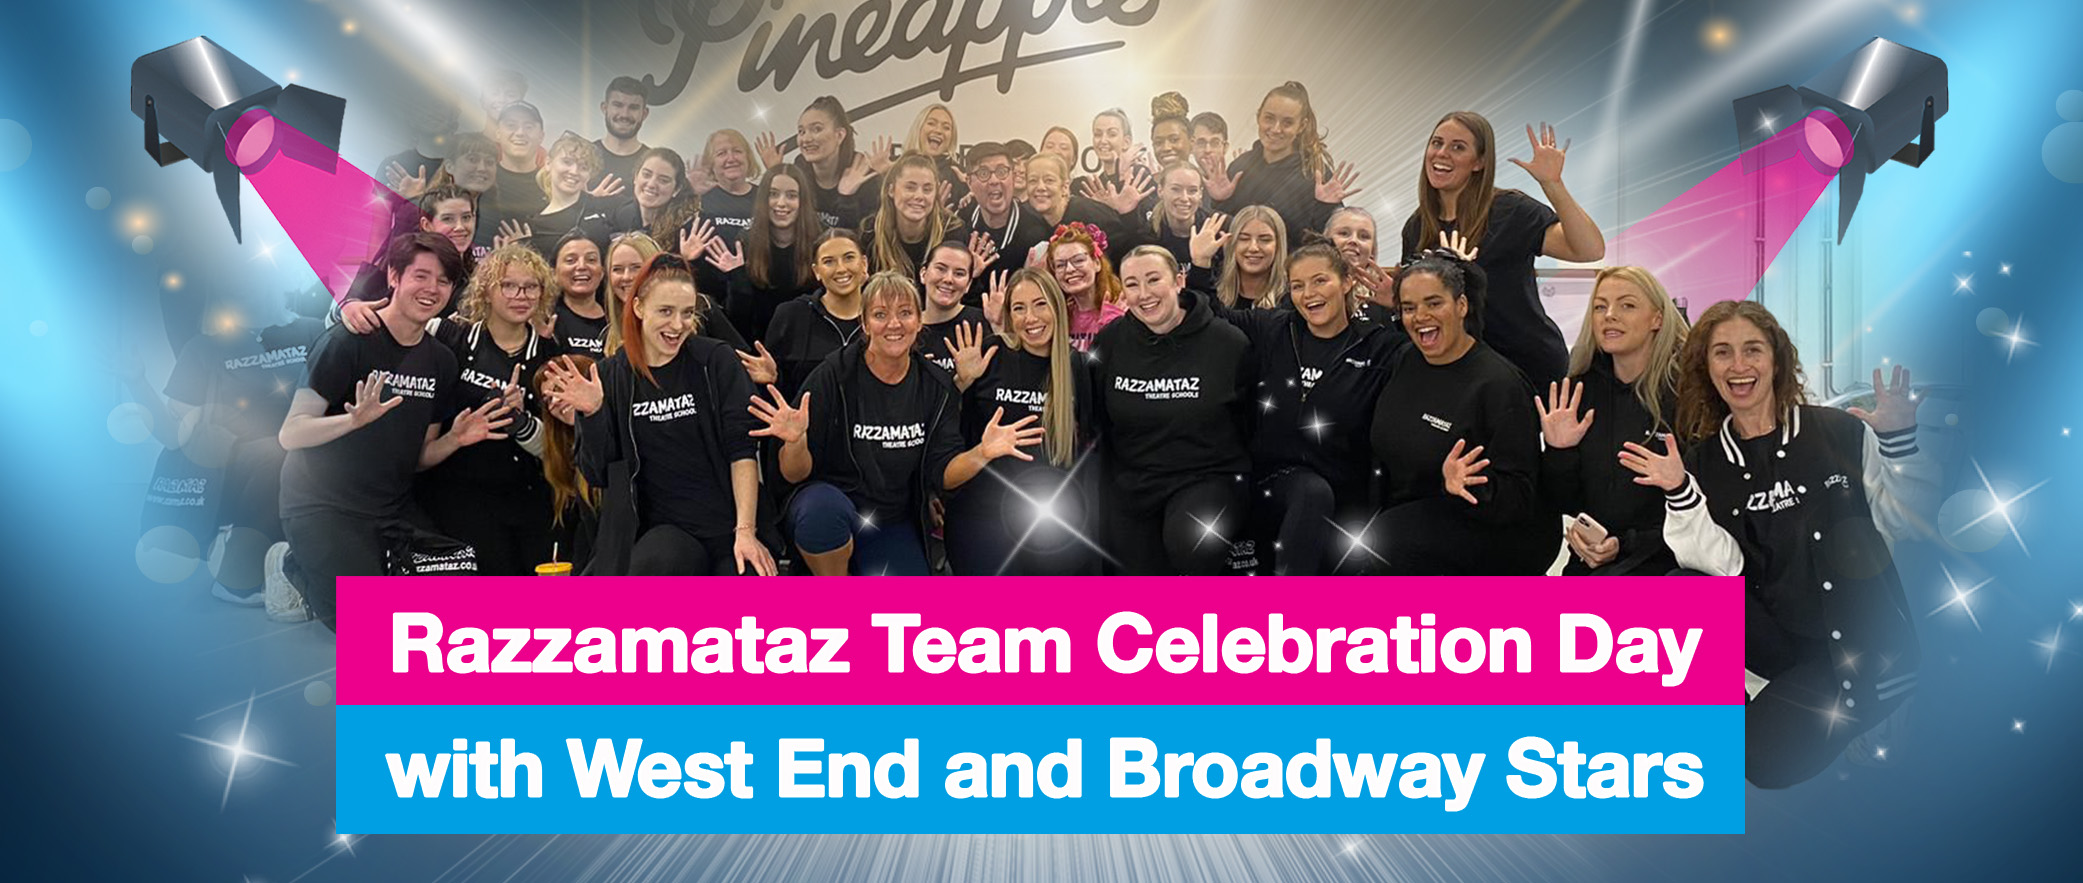 Razzamataz Team Celebration Day with West End and Broadway Stars